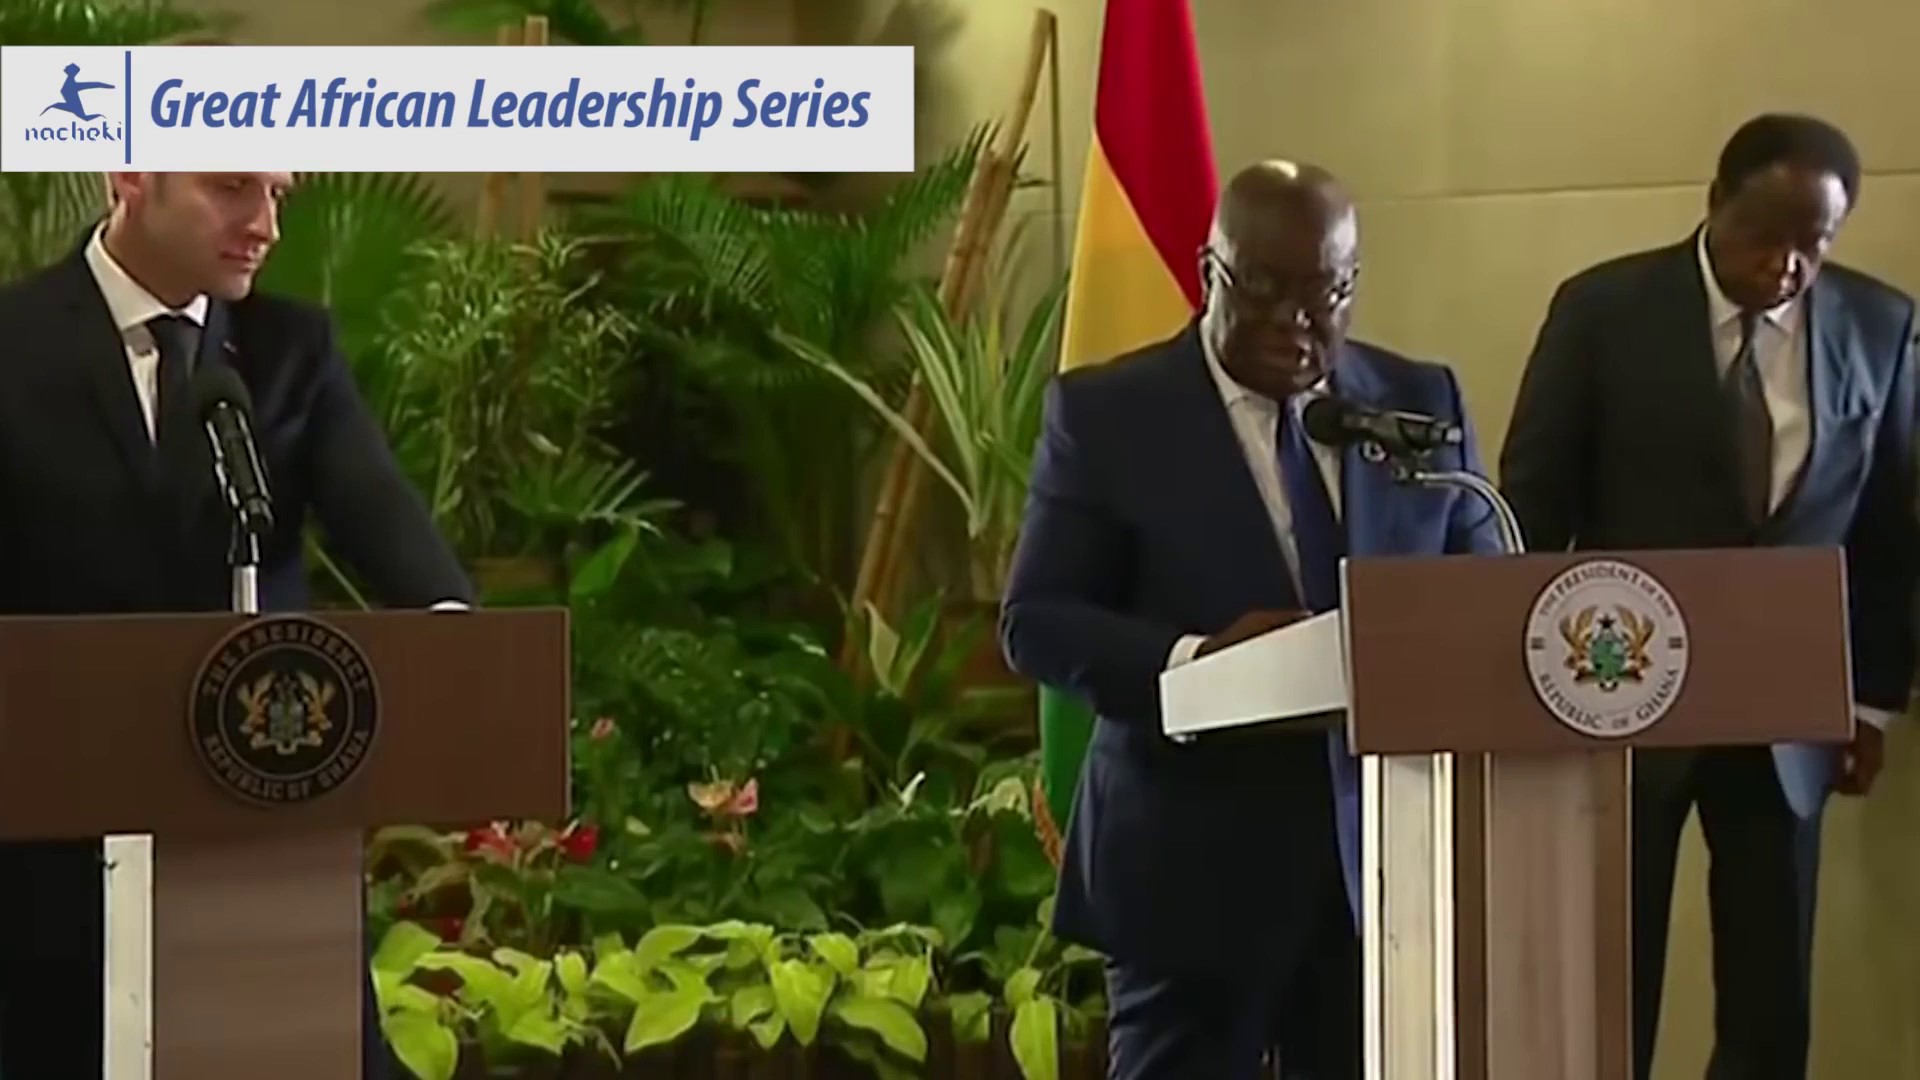 President of Ghana gives EU leaders advice